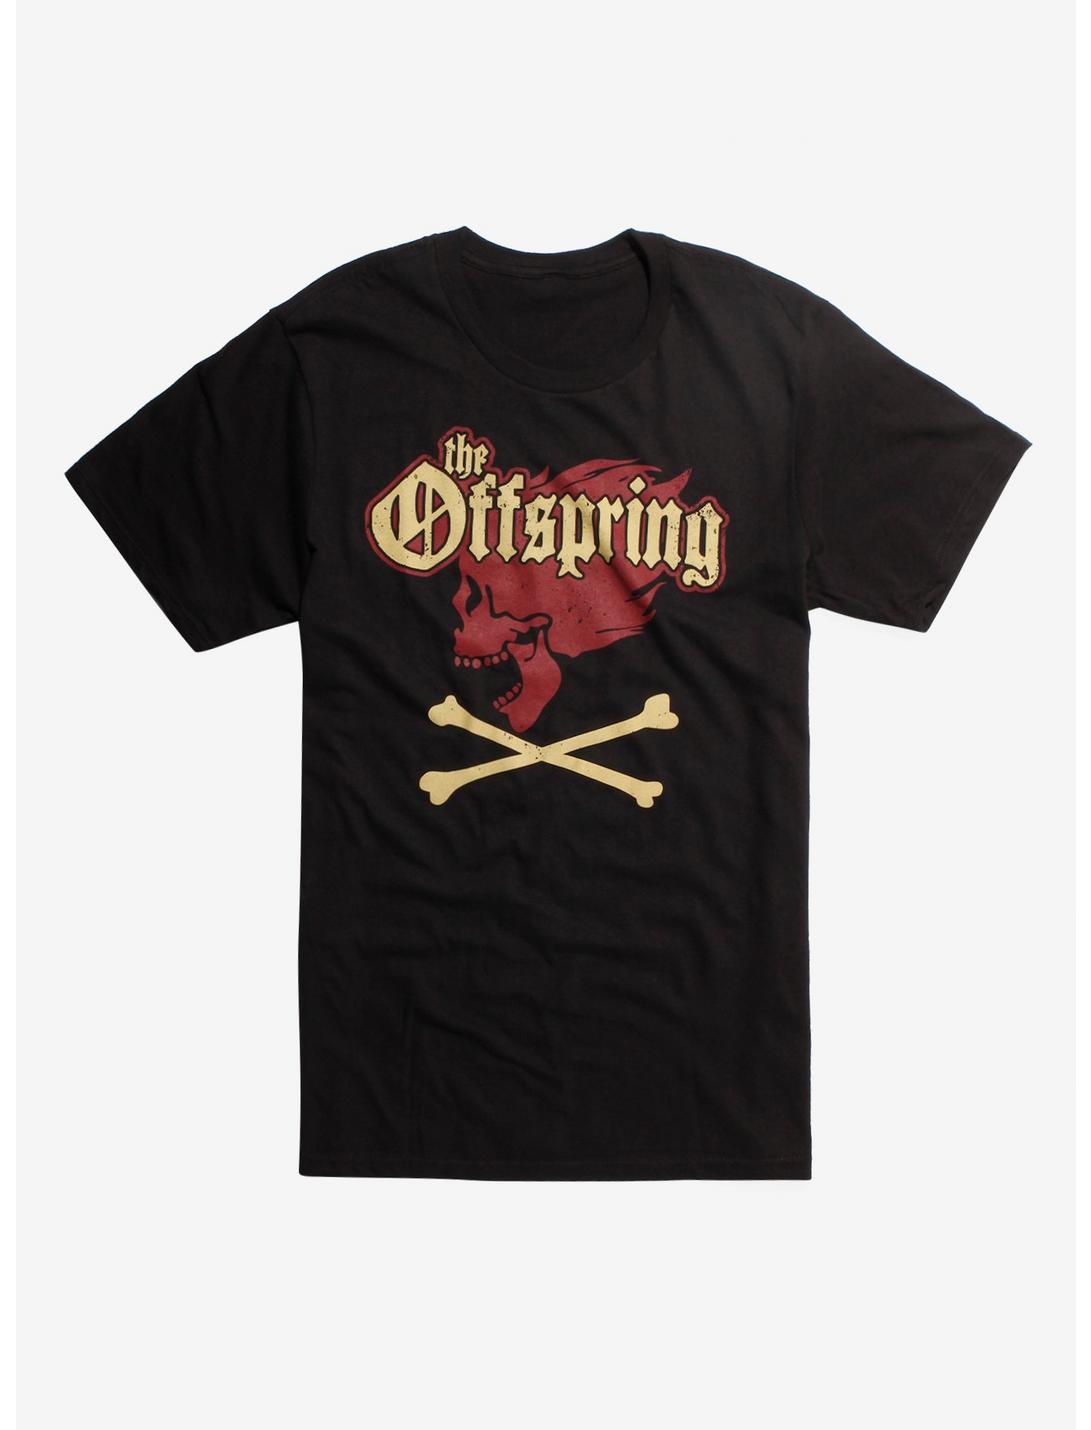 The Offspring Flaming Skull T-Shirt, BLACK, hi-res